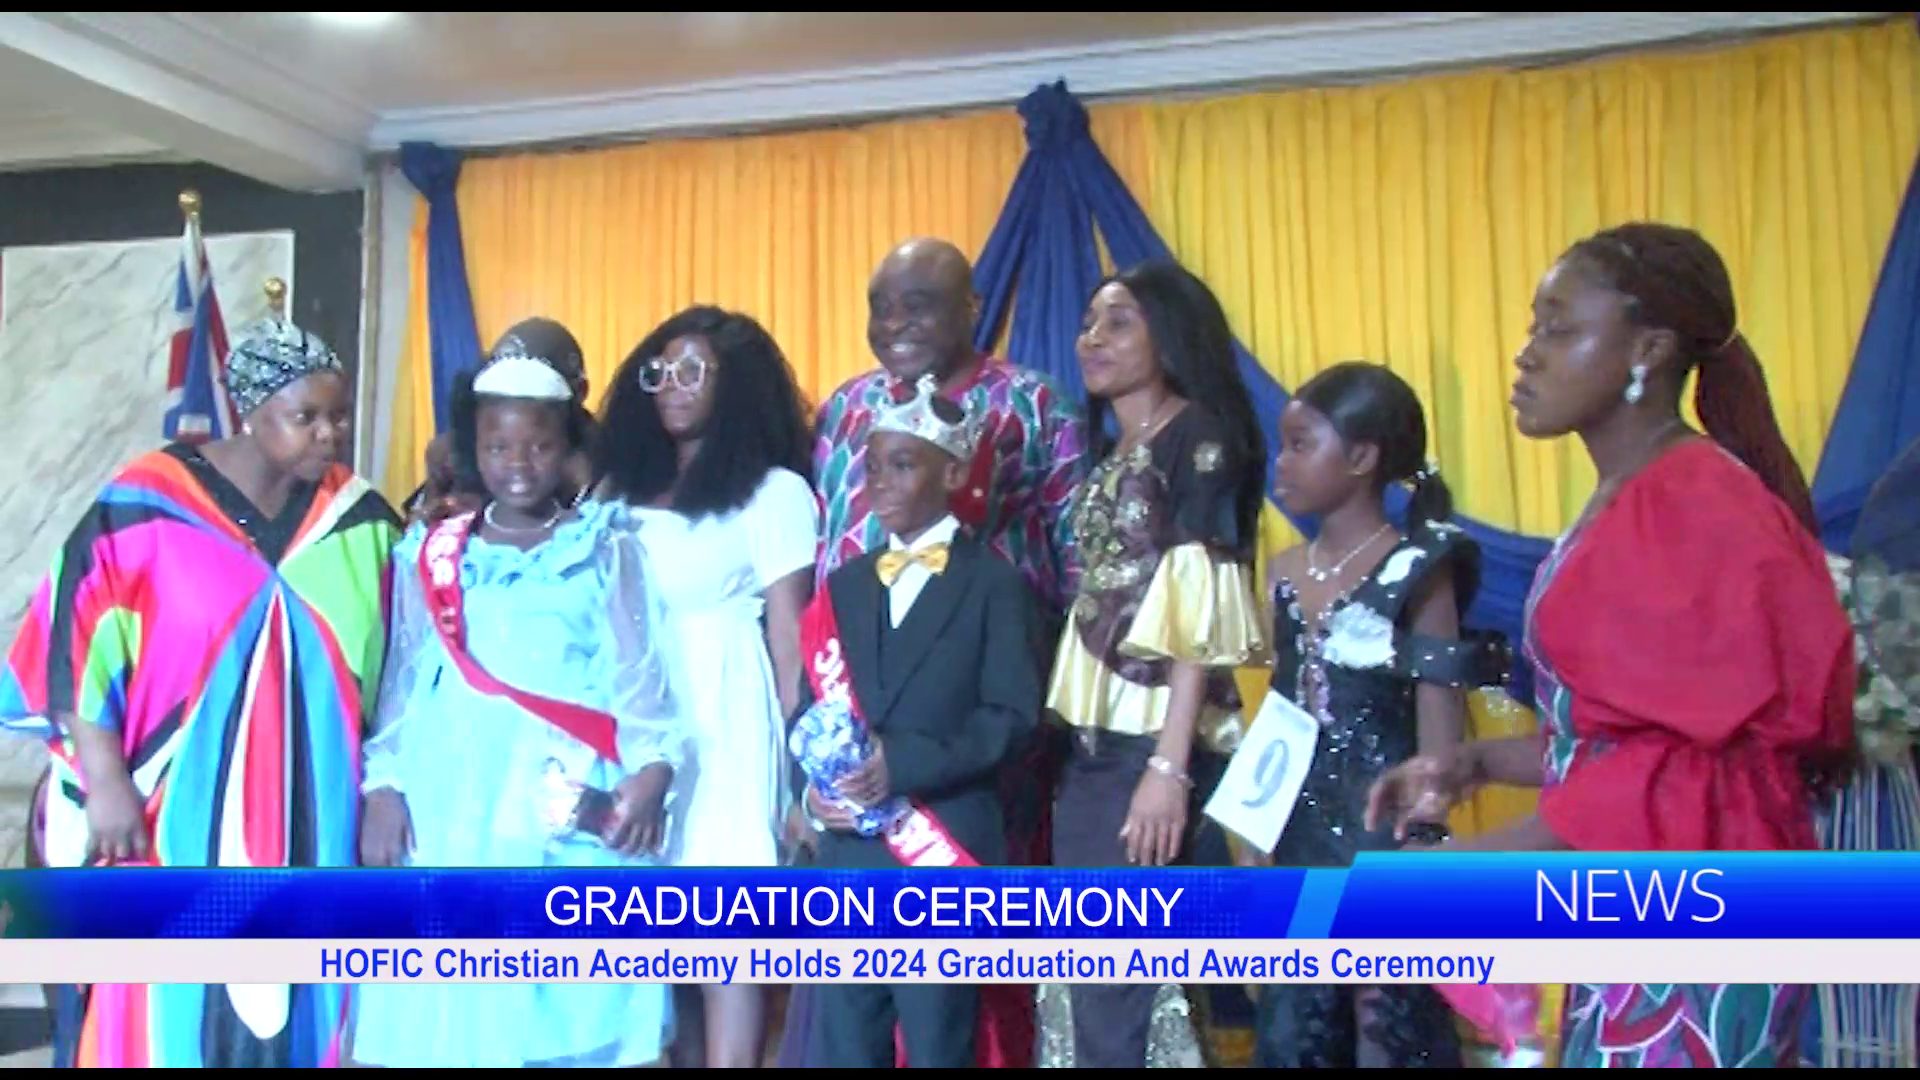 HOFIC Christian Academy Holds 2024 Graduation And Awards Ceremony